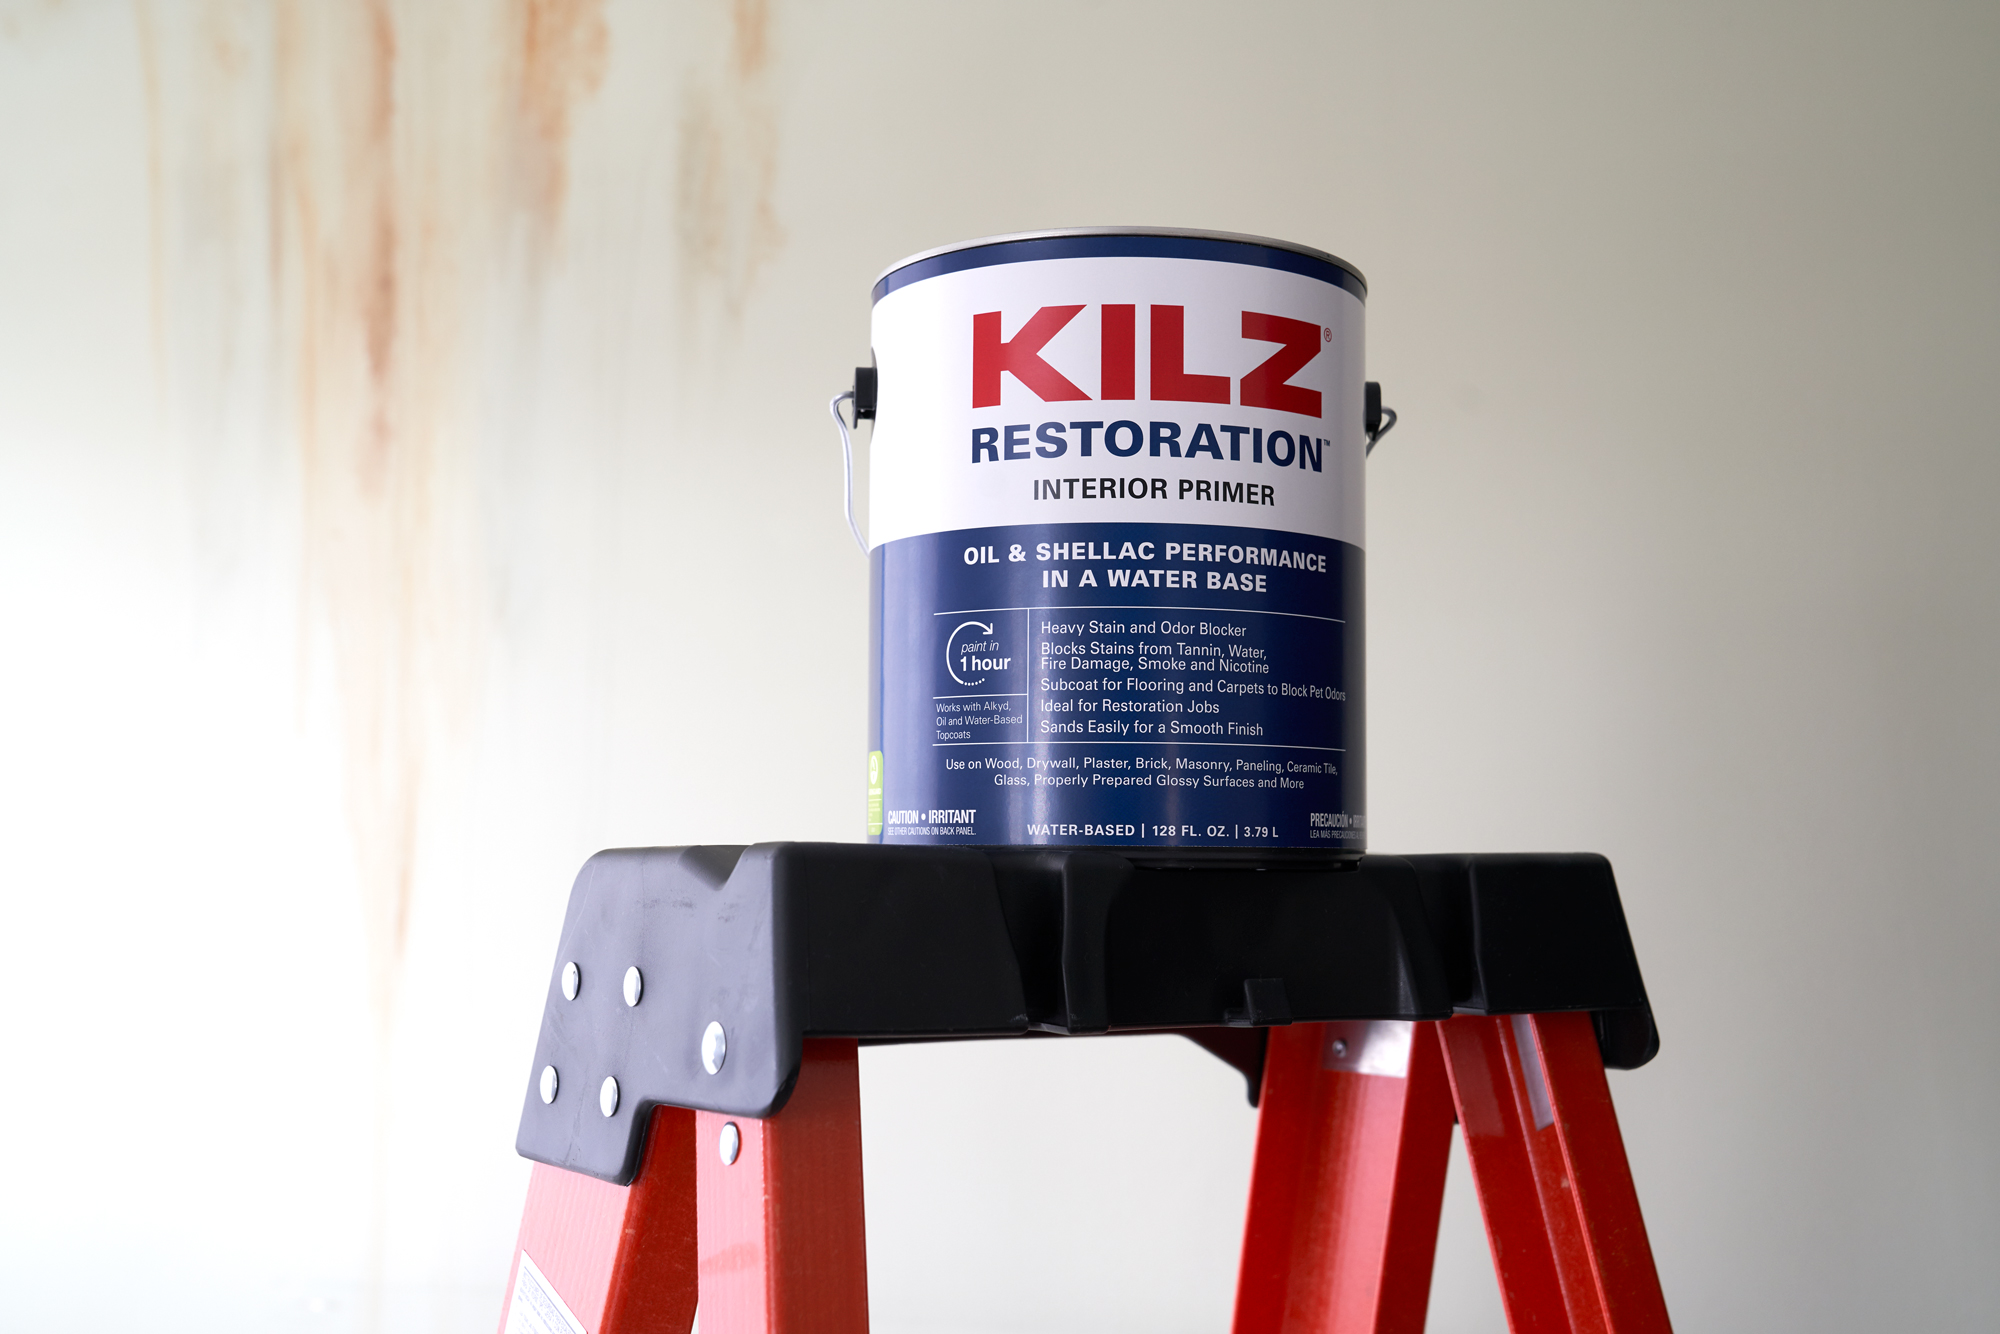 KILZ Restoration Interior Primer 1 gallon can